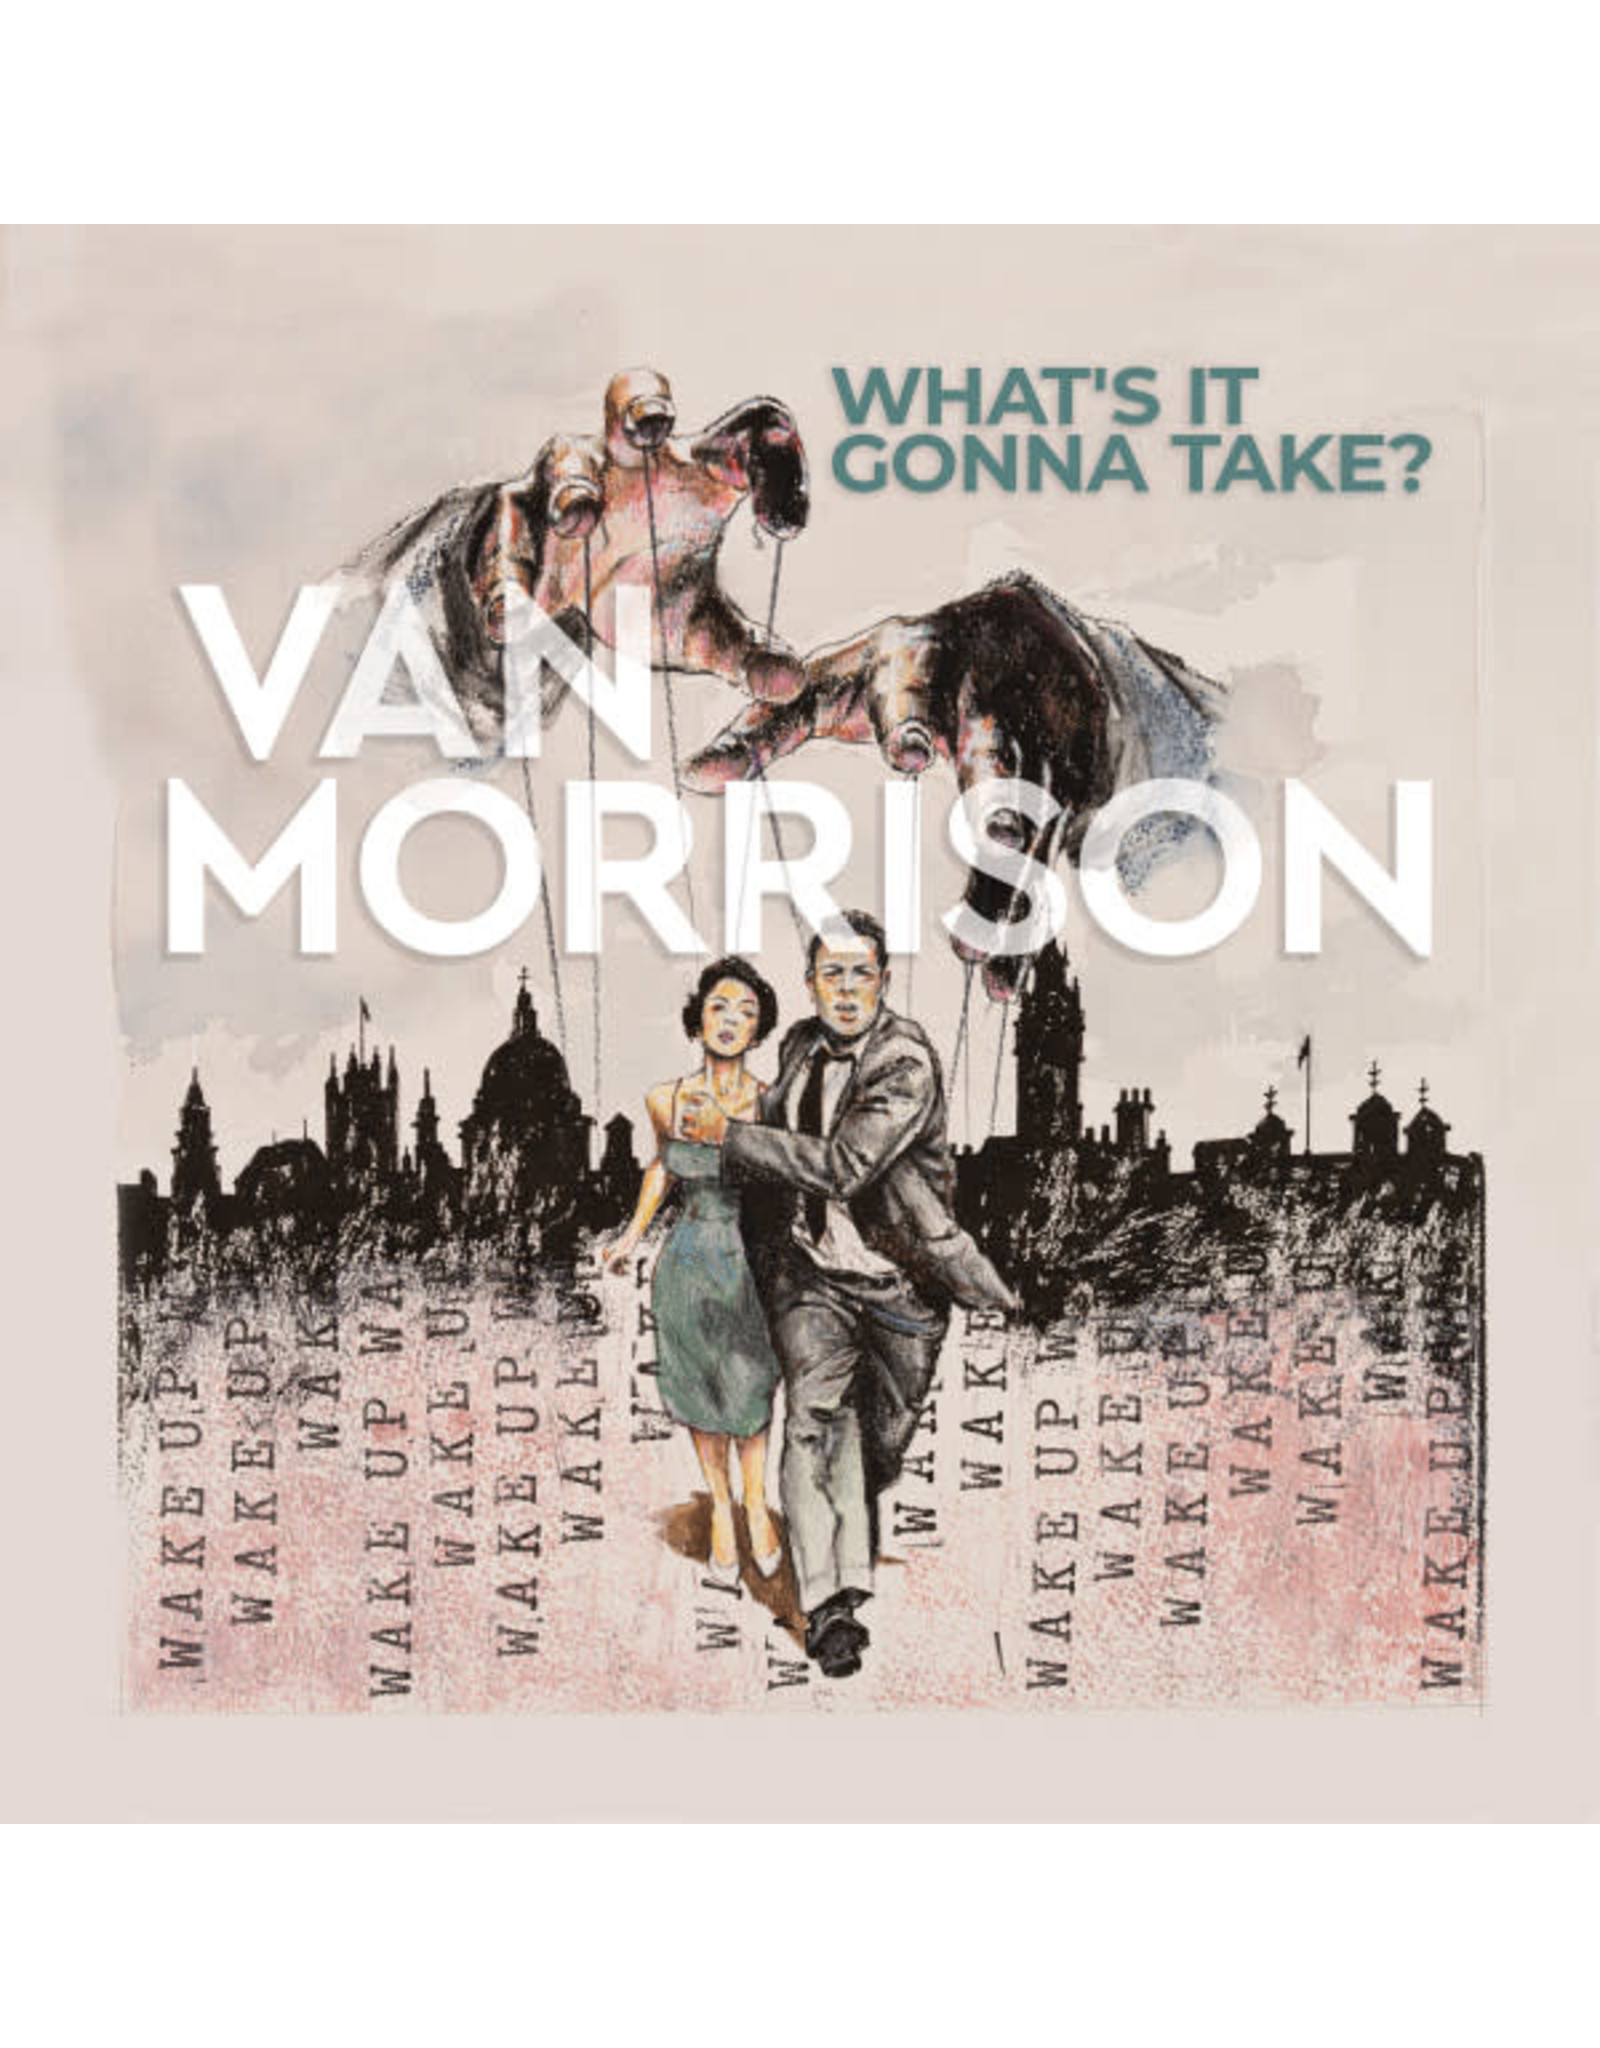 Morrison, Van - What's It Gonna Take? (Ltd. Indie Edition Grey Vinyl) 2LP